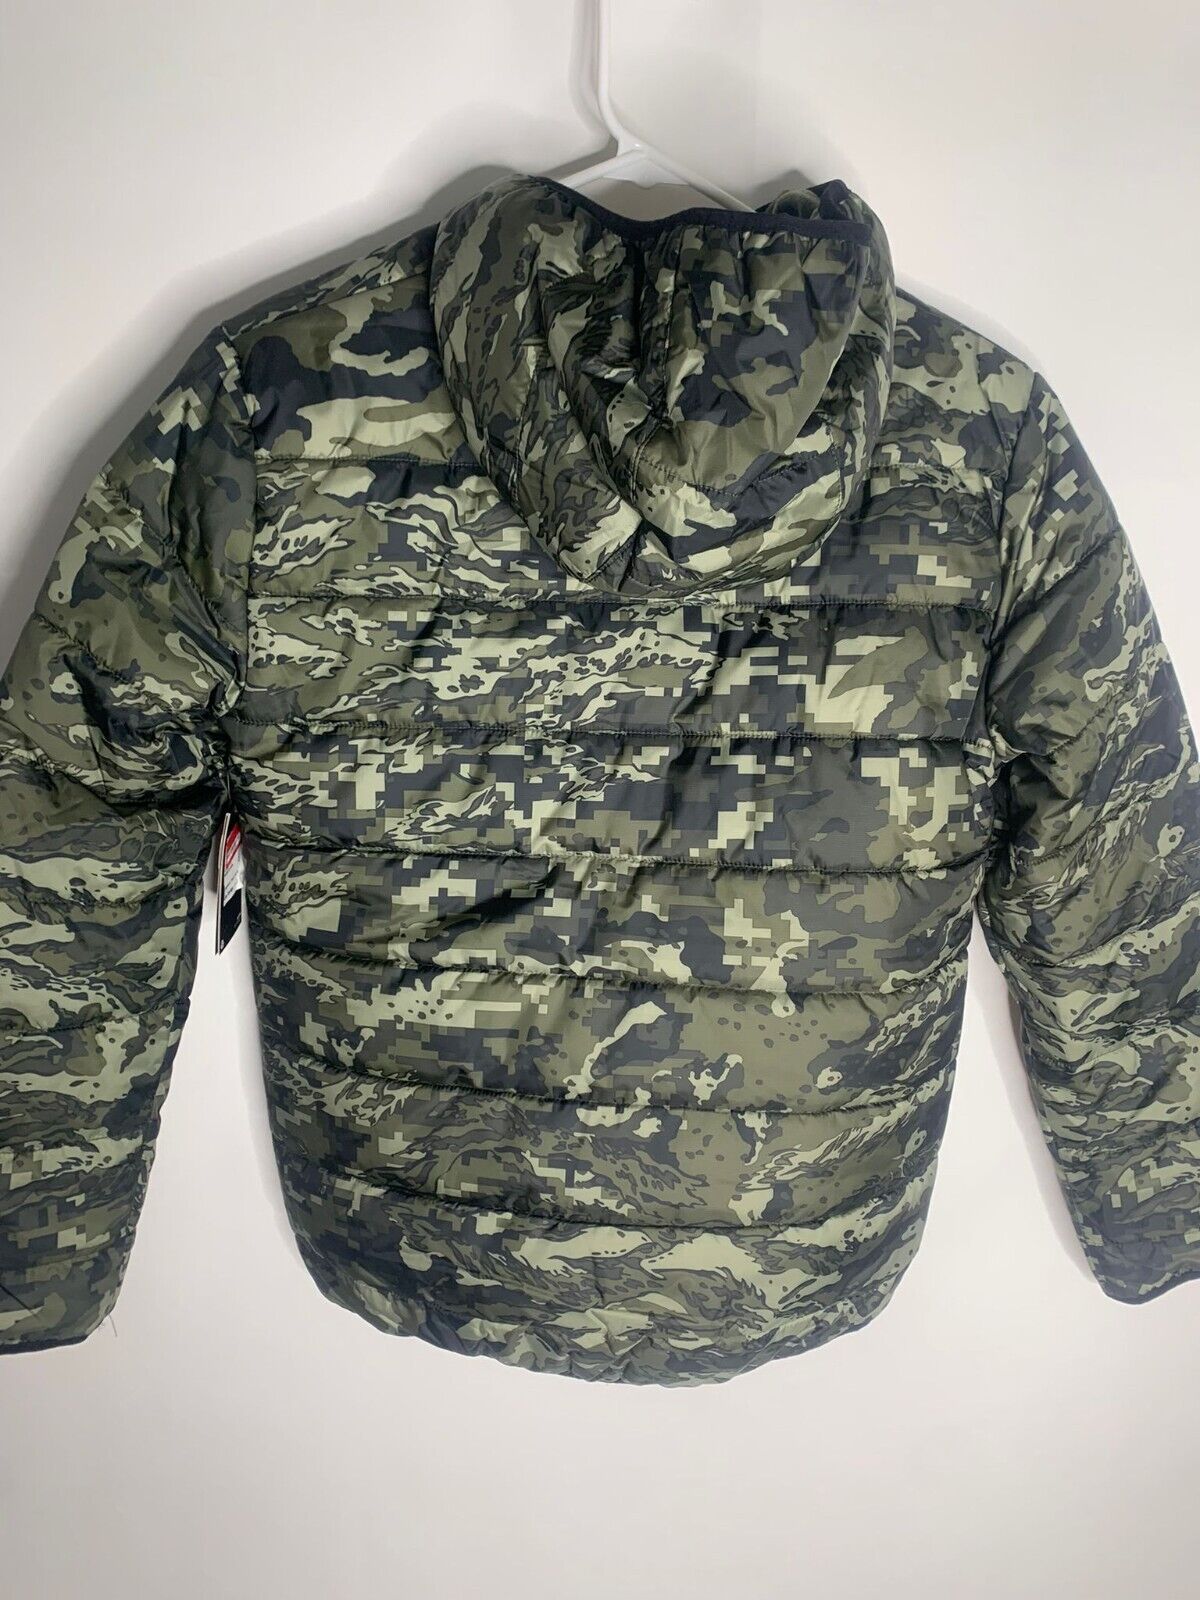 Under Armour Youth Boys Kids Camo Black Reversible Pronto Puffer Jacket Fleece